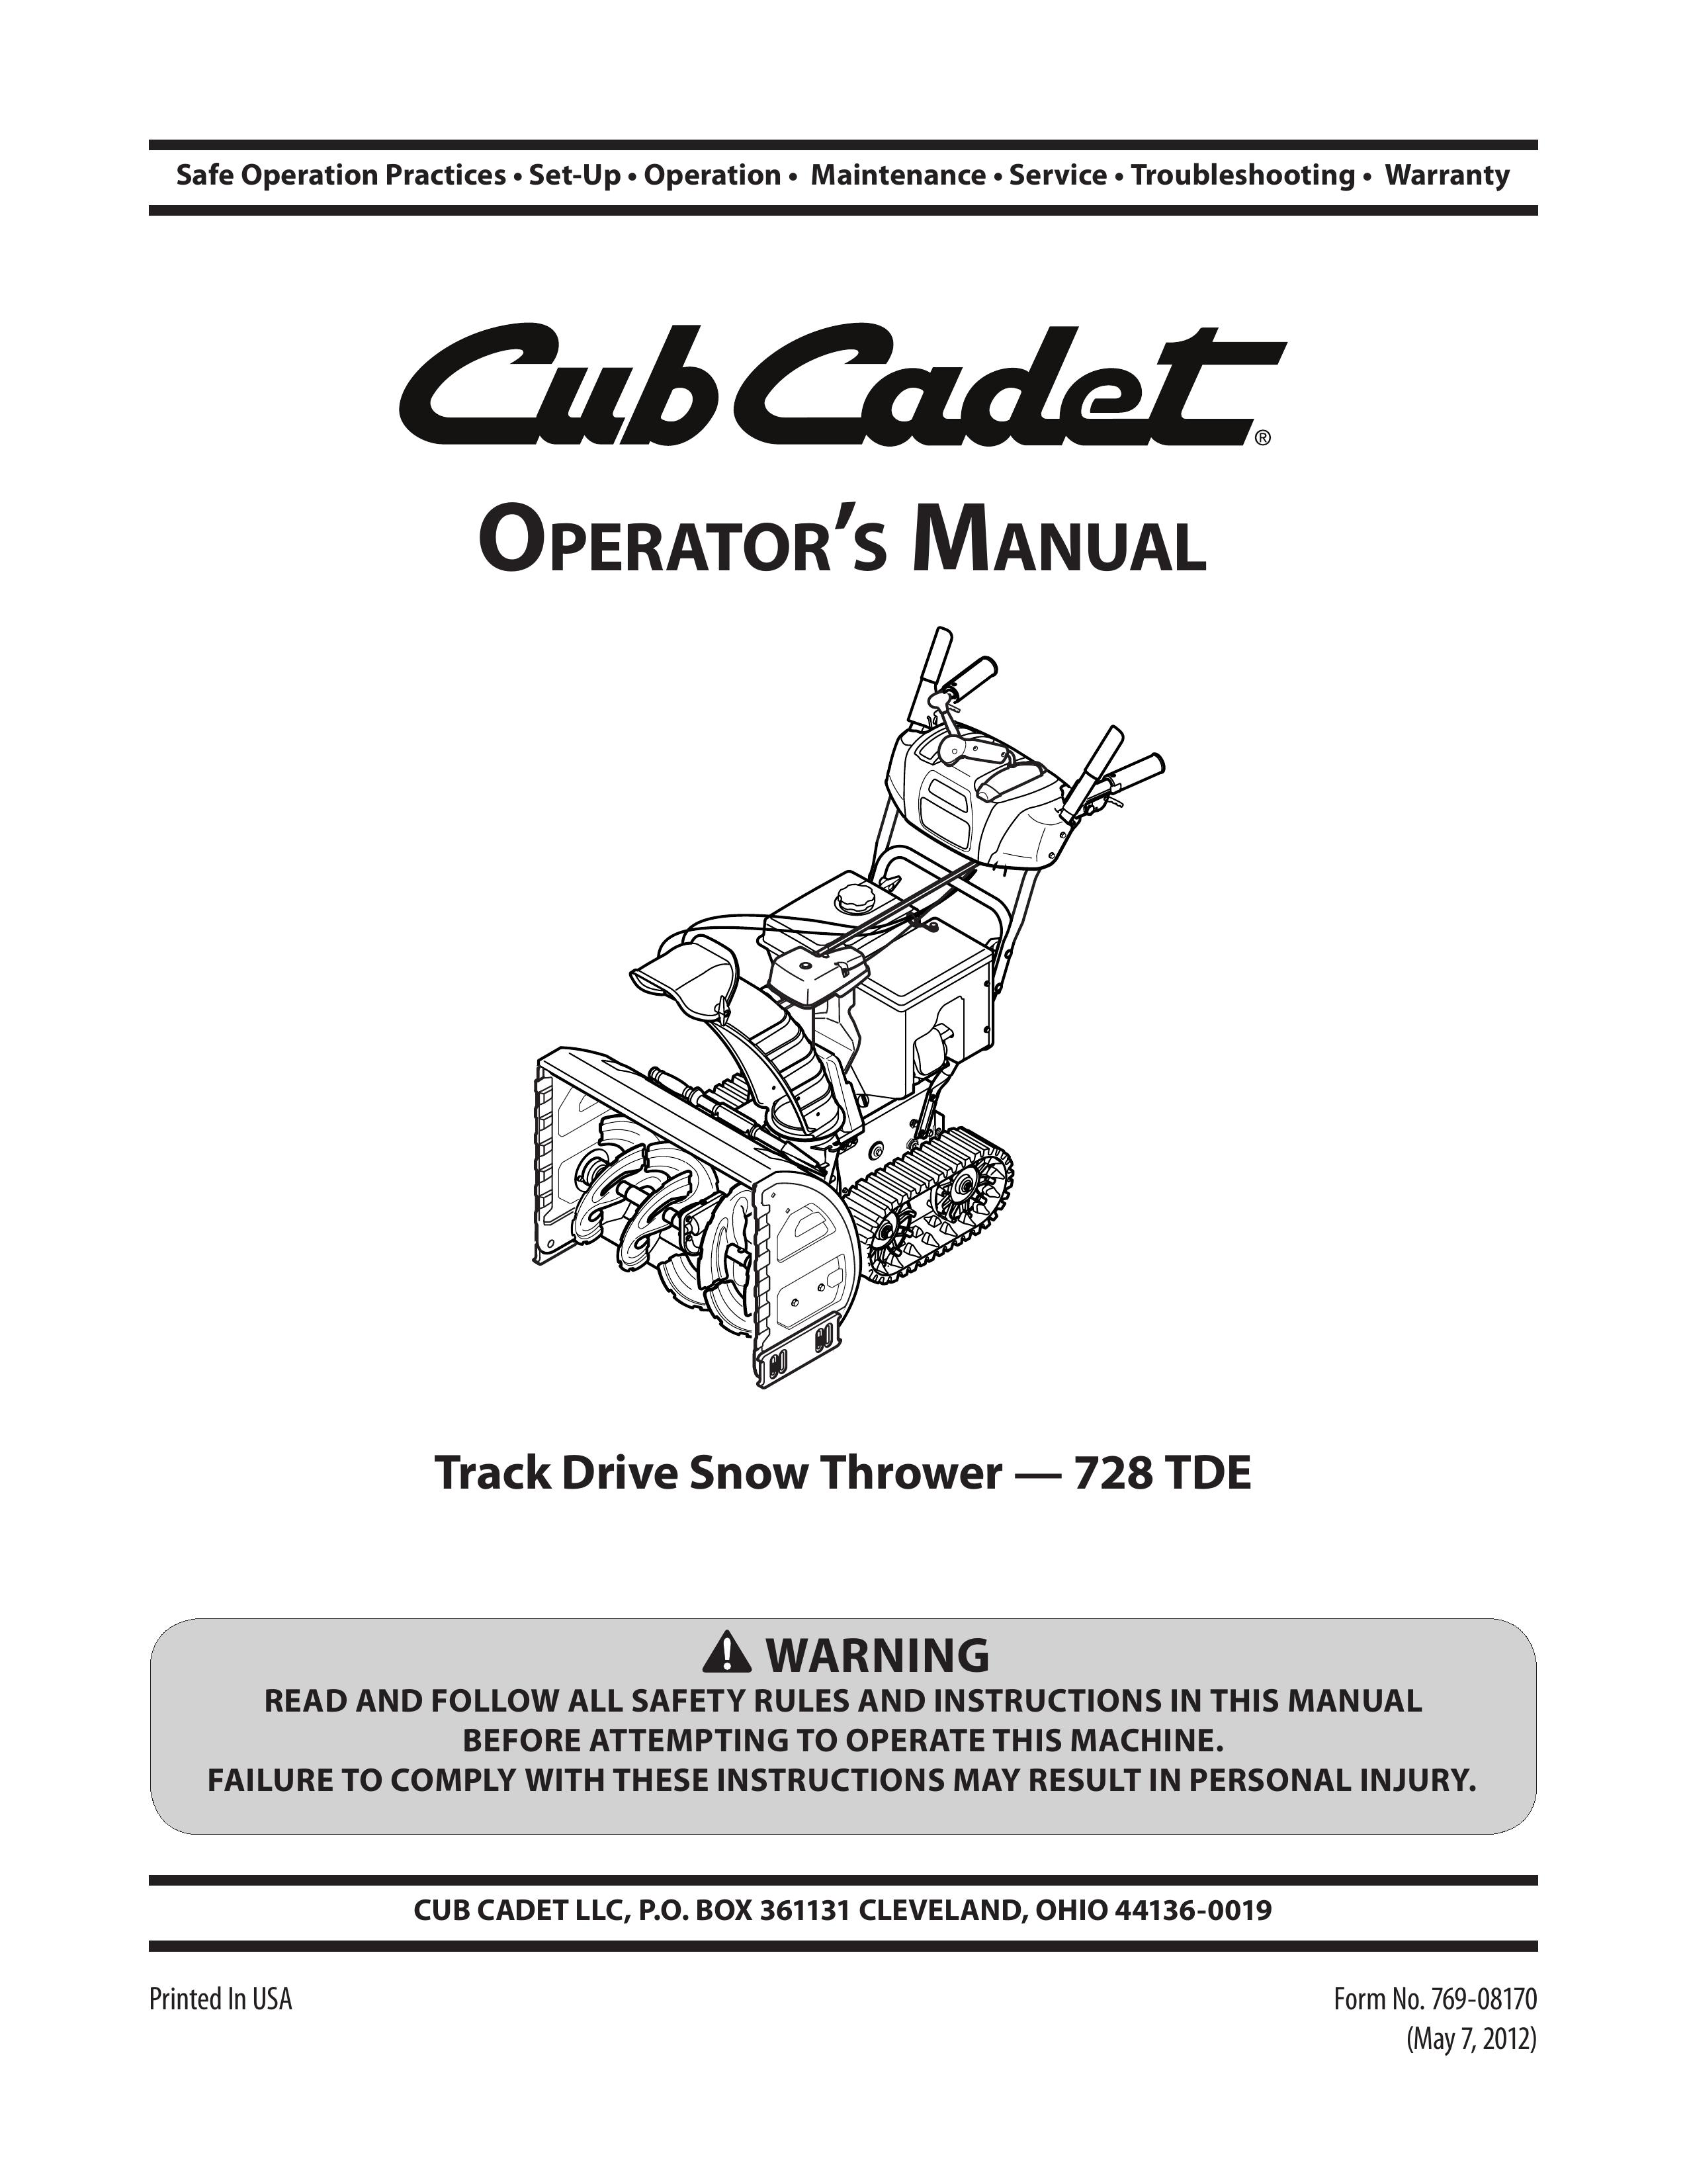 Cub Cadet 728 TDE Snow Blower User Manual